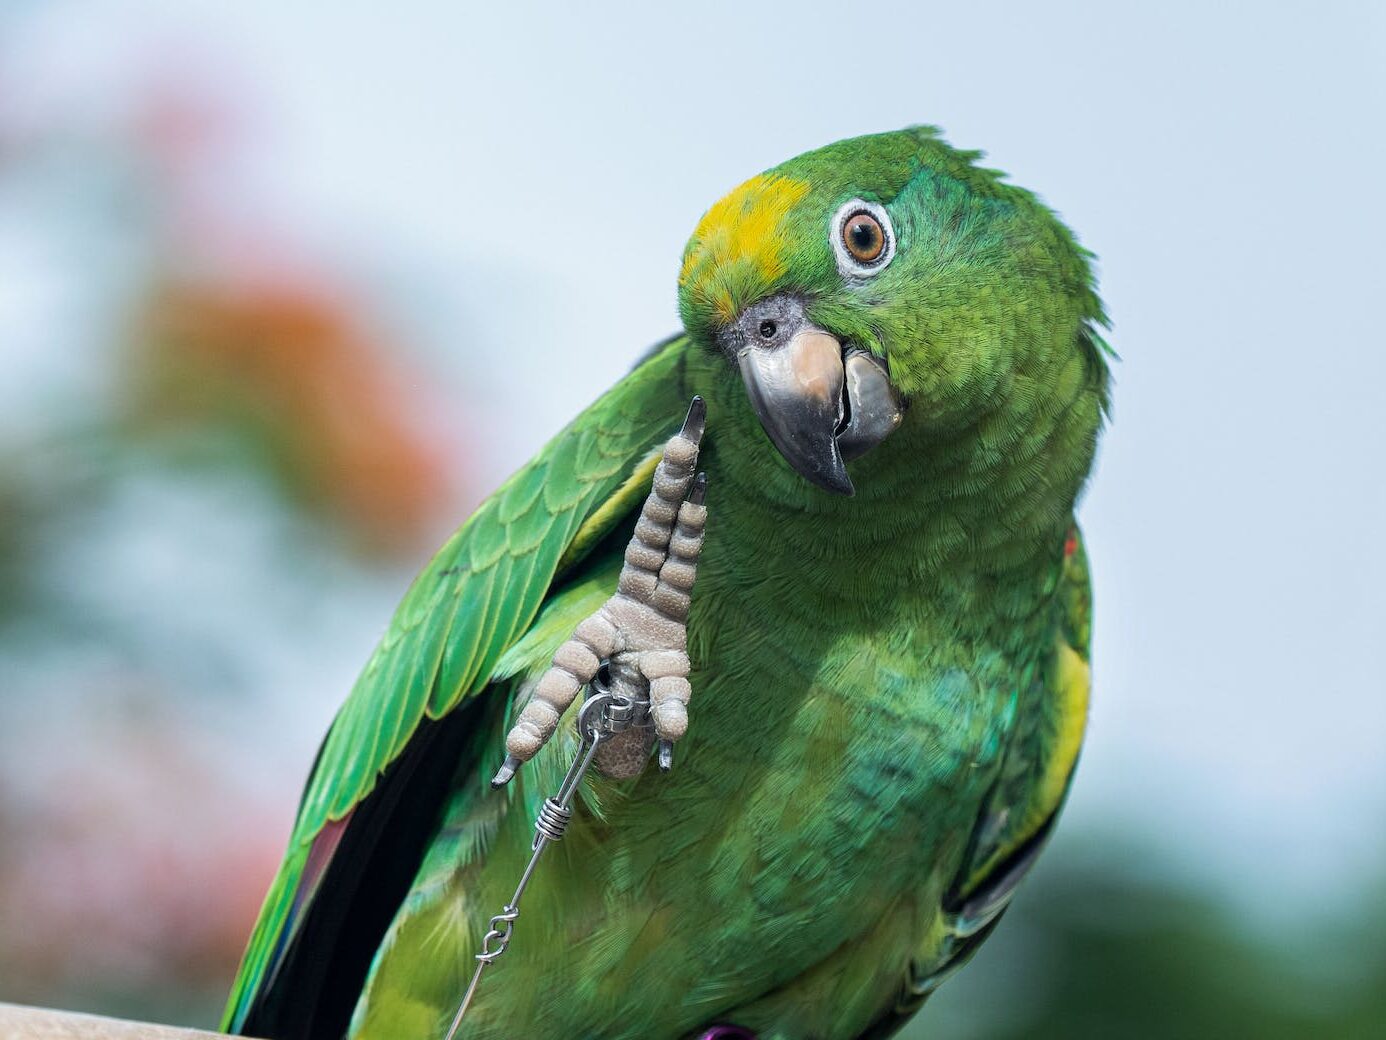 Close-Up Shot of a Parrot